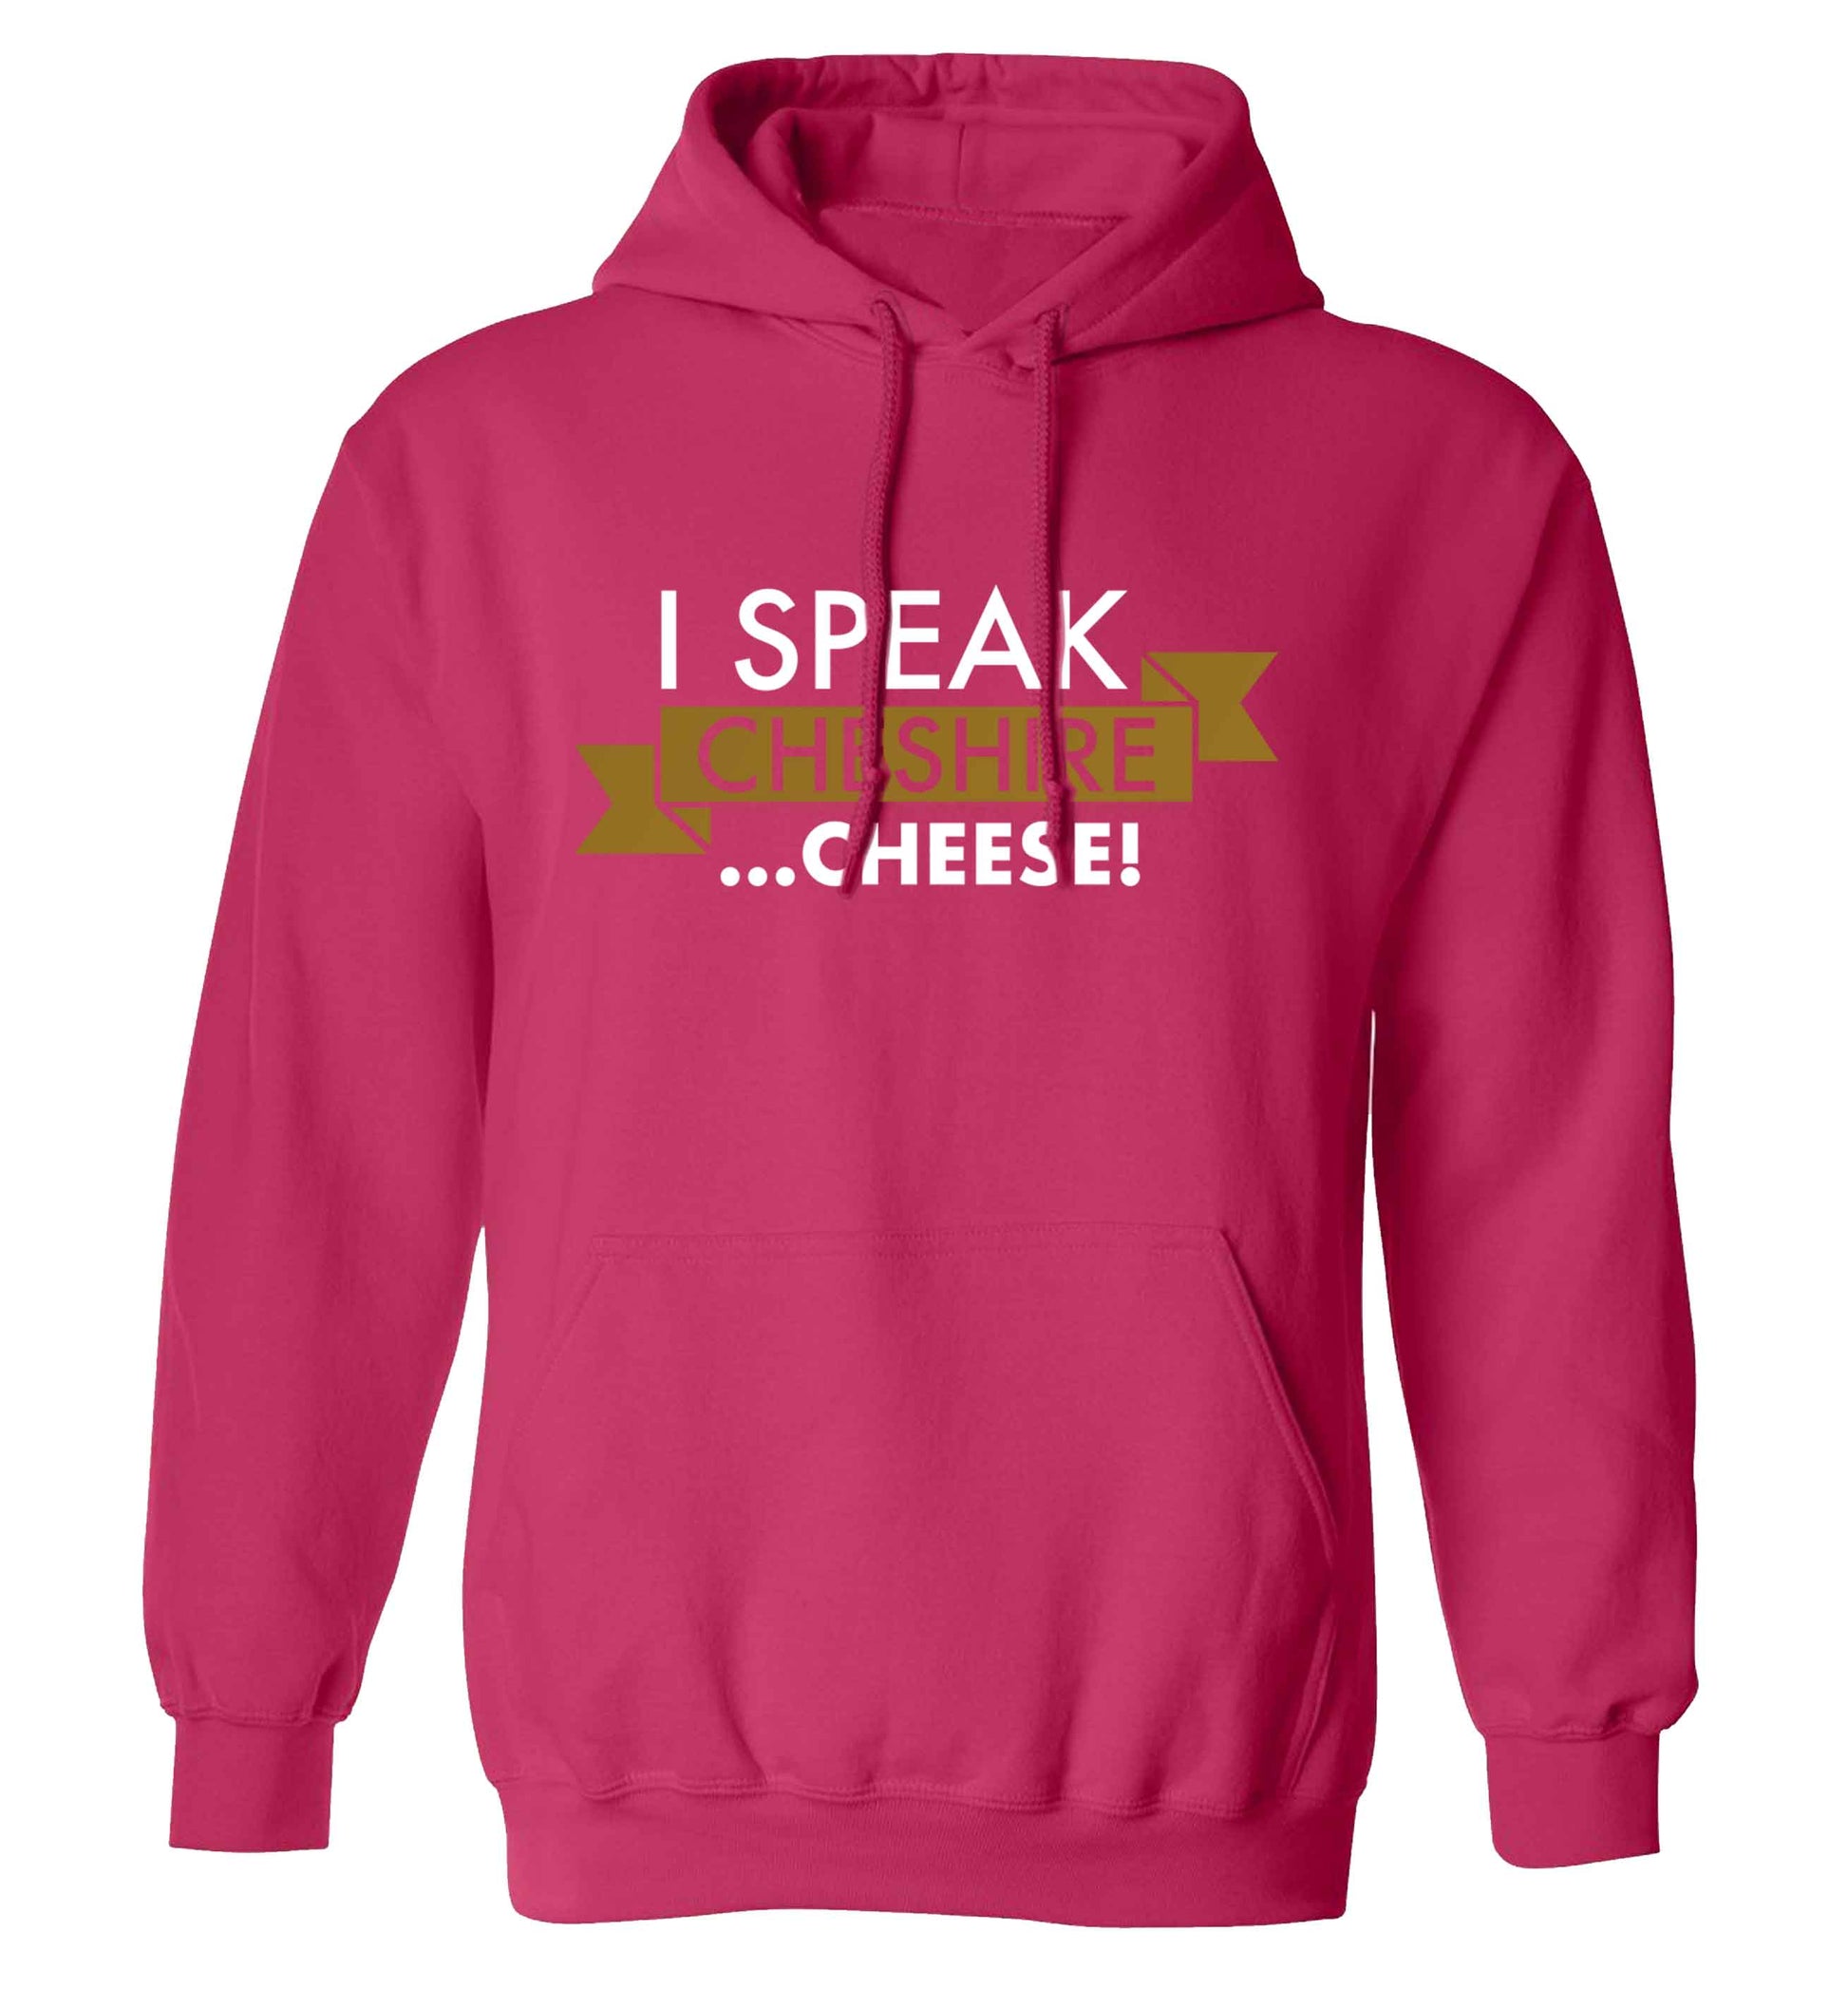 I speak Cheshire cheese adults unisex pink hoodie 2XL